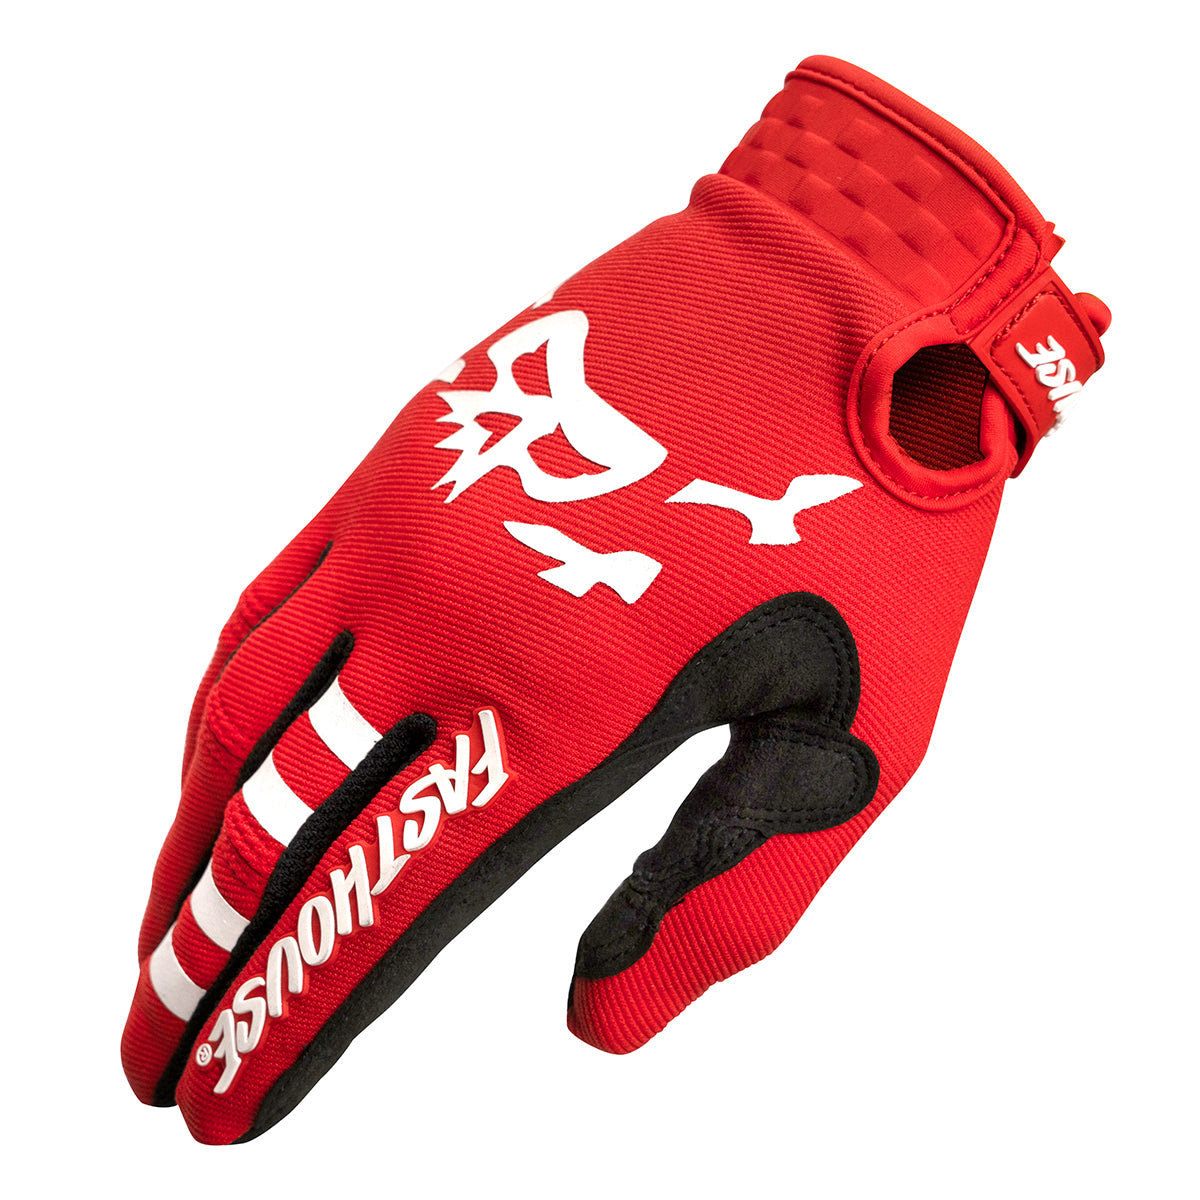 Speed Style Slammer Glove - Red